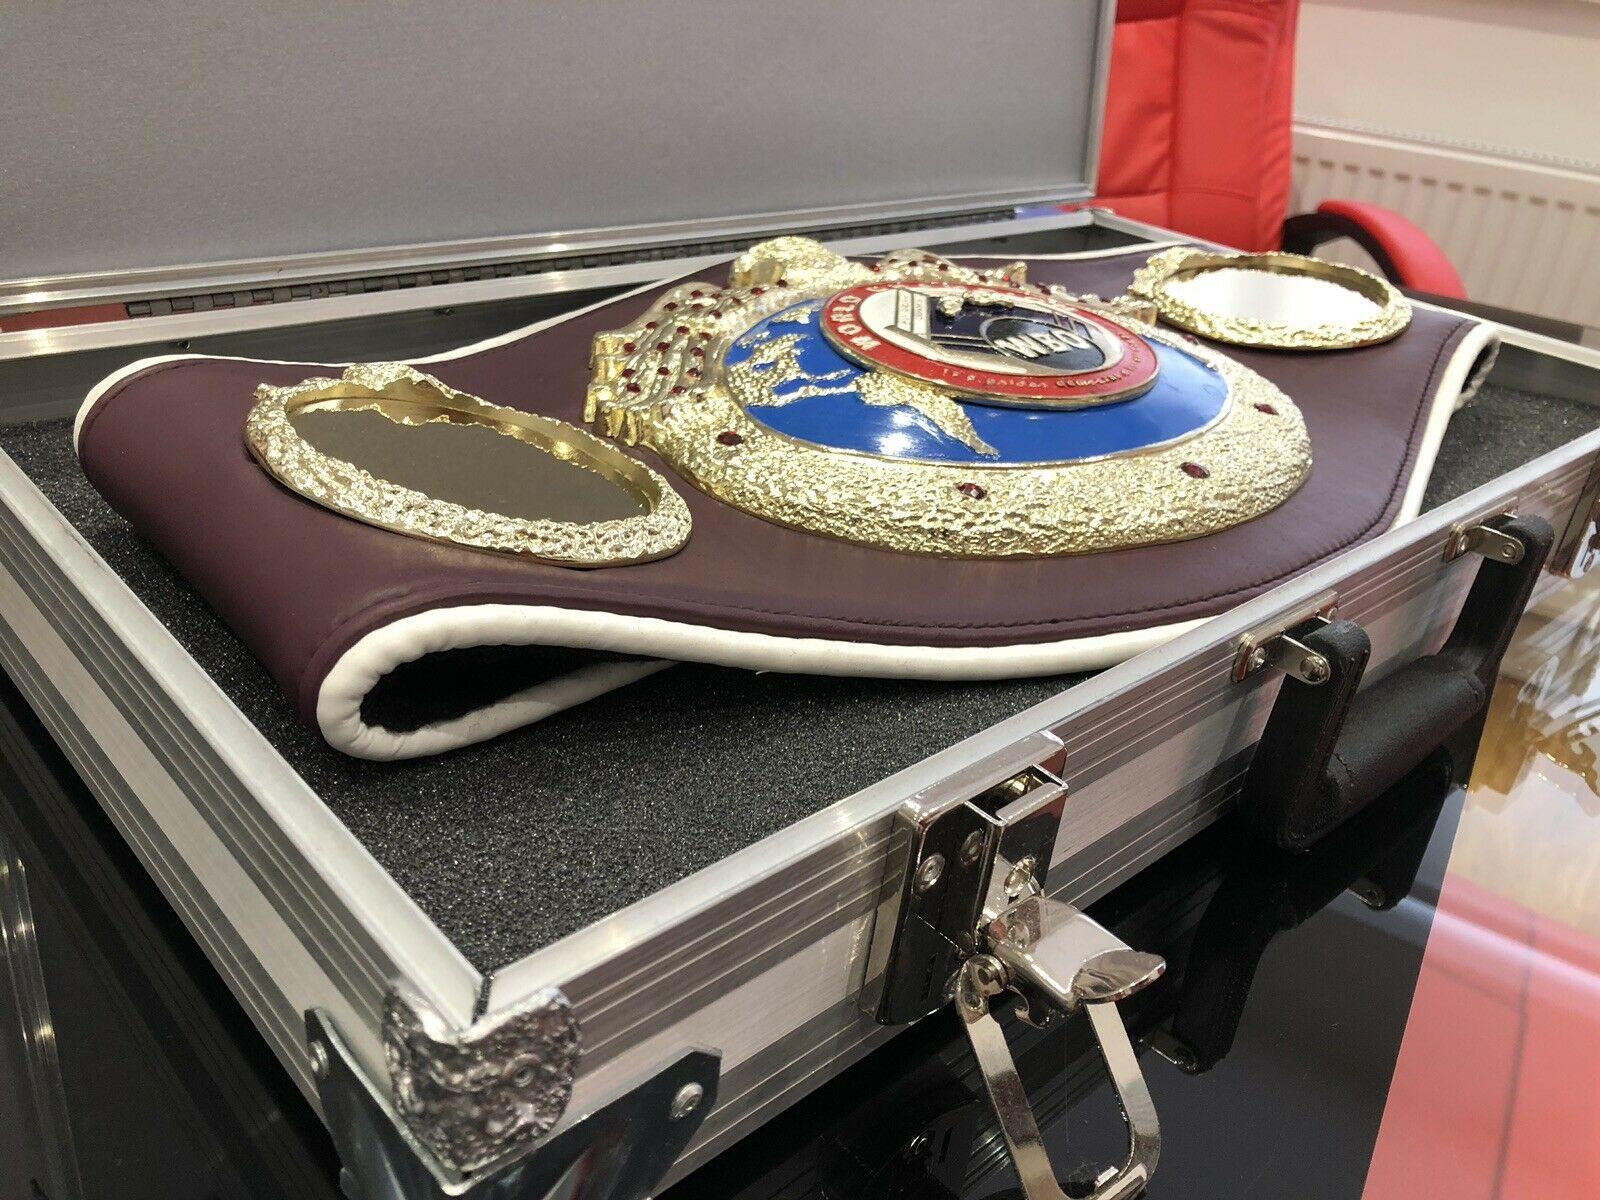 TITLE CHAMPION BOXING Championship Belt